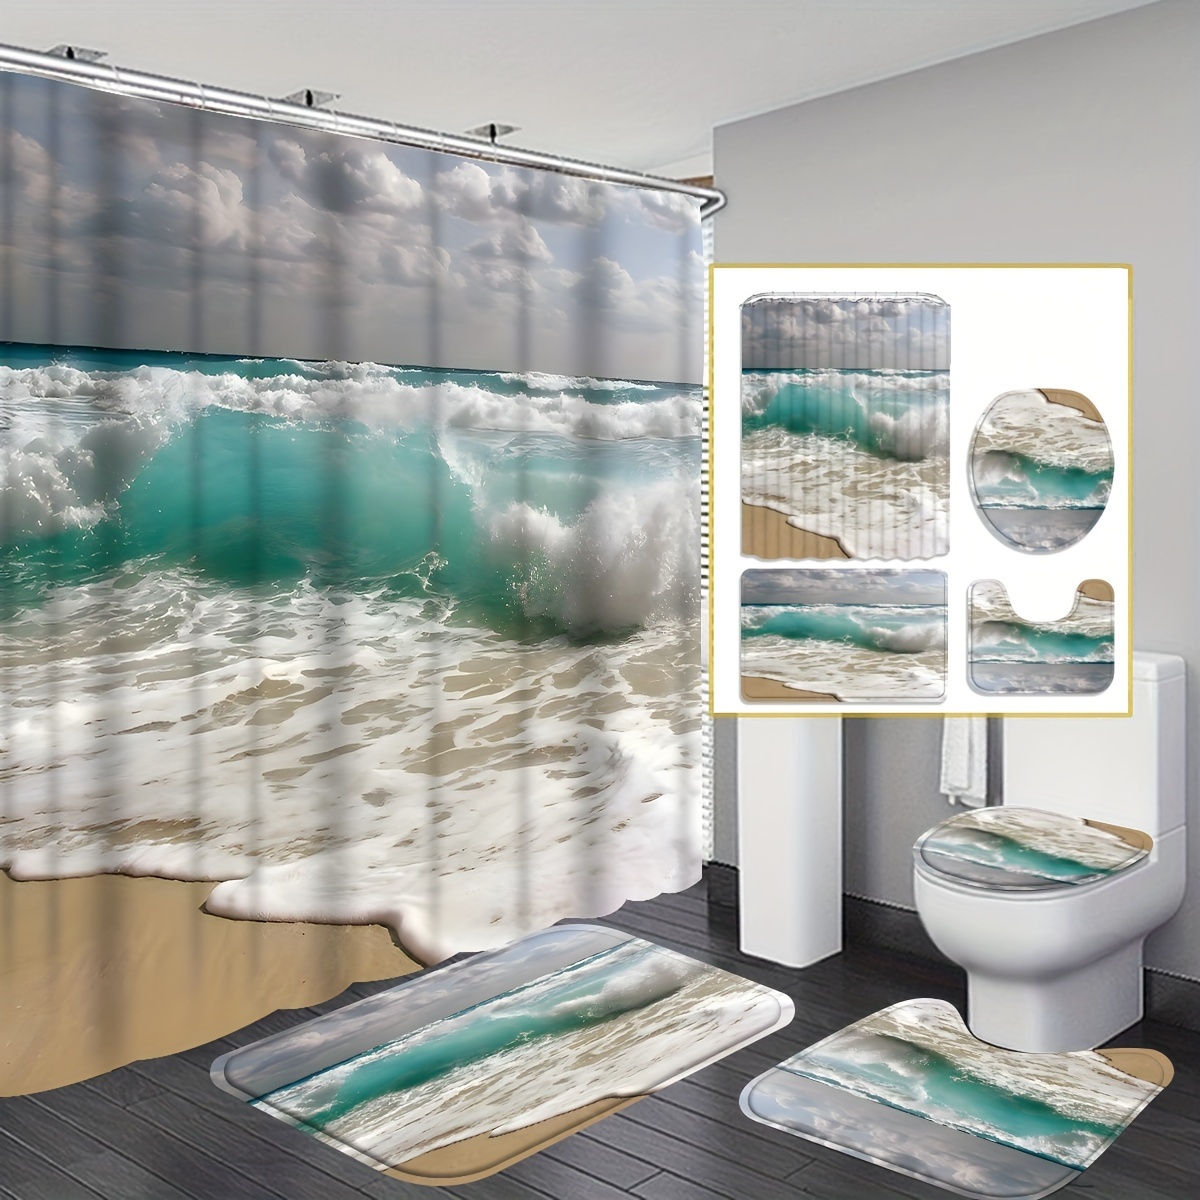 Divertida cortina de ducha con diseño de gato de dinosaurio en ondas  Kanagawa japonesas para baño, juego de cortina de ducha de anime divertido  de